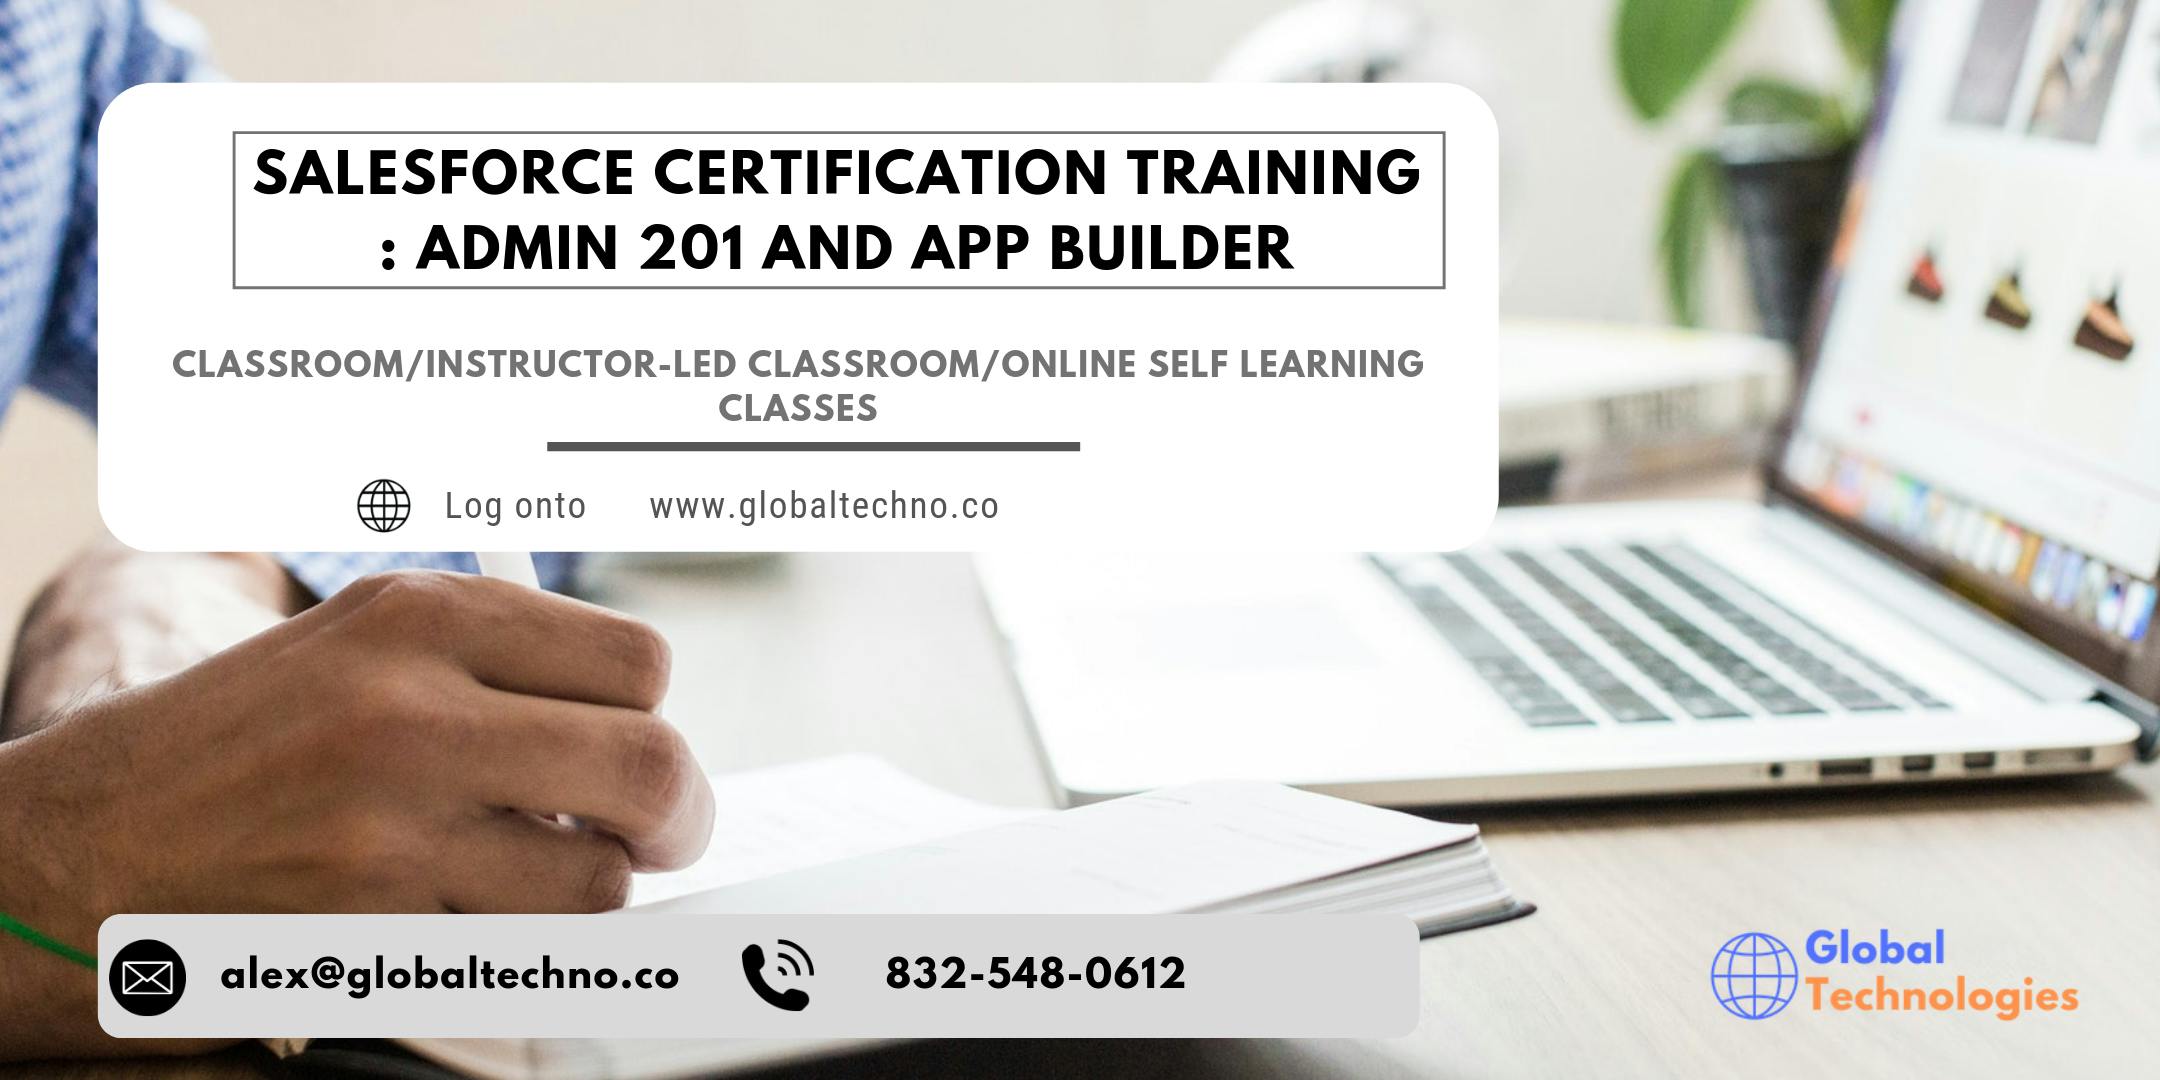 Salesforce Admin 201 & App Builder Certification Training in Atlanta, GA